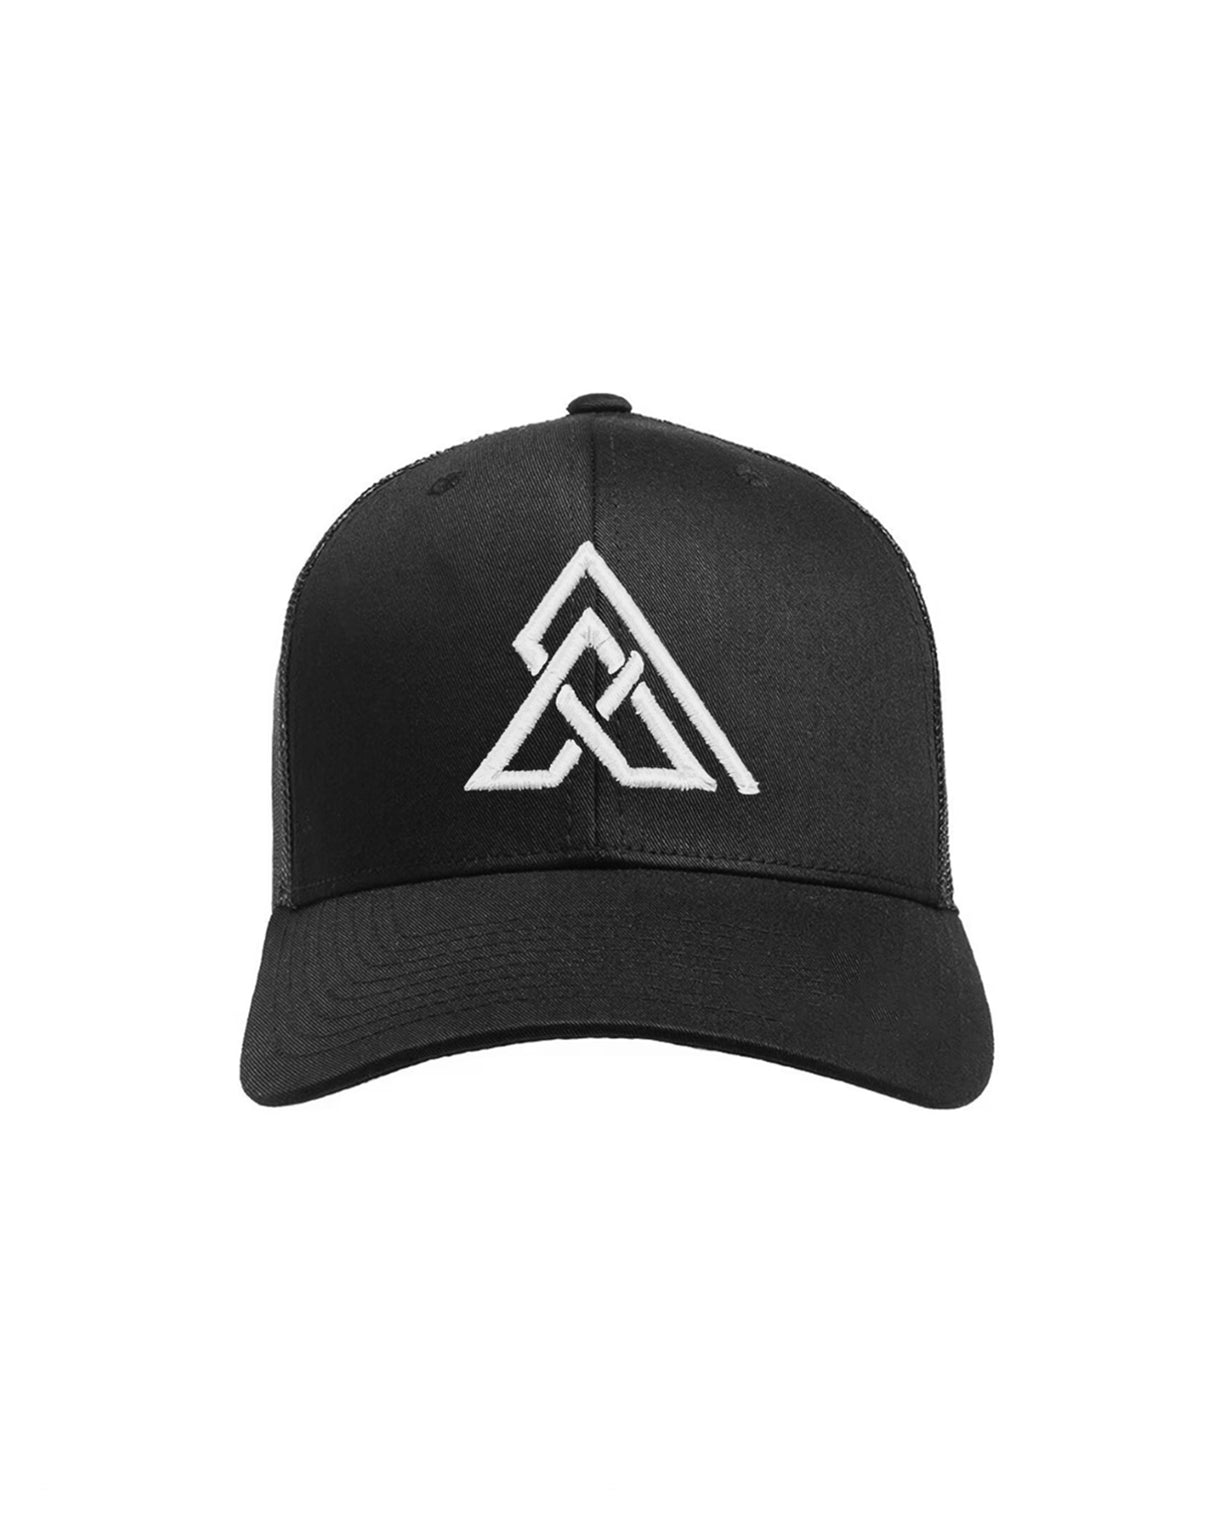 AA Concepts Co Hats